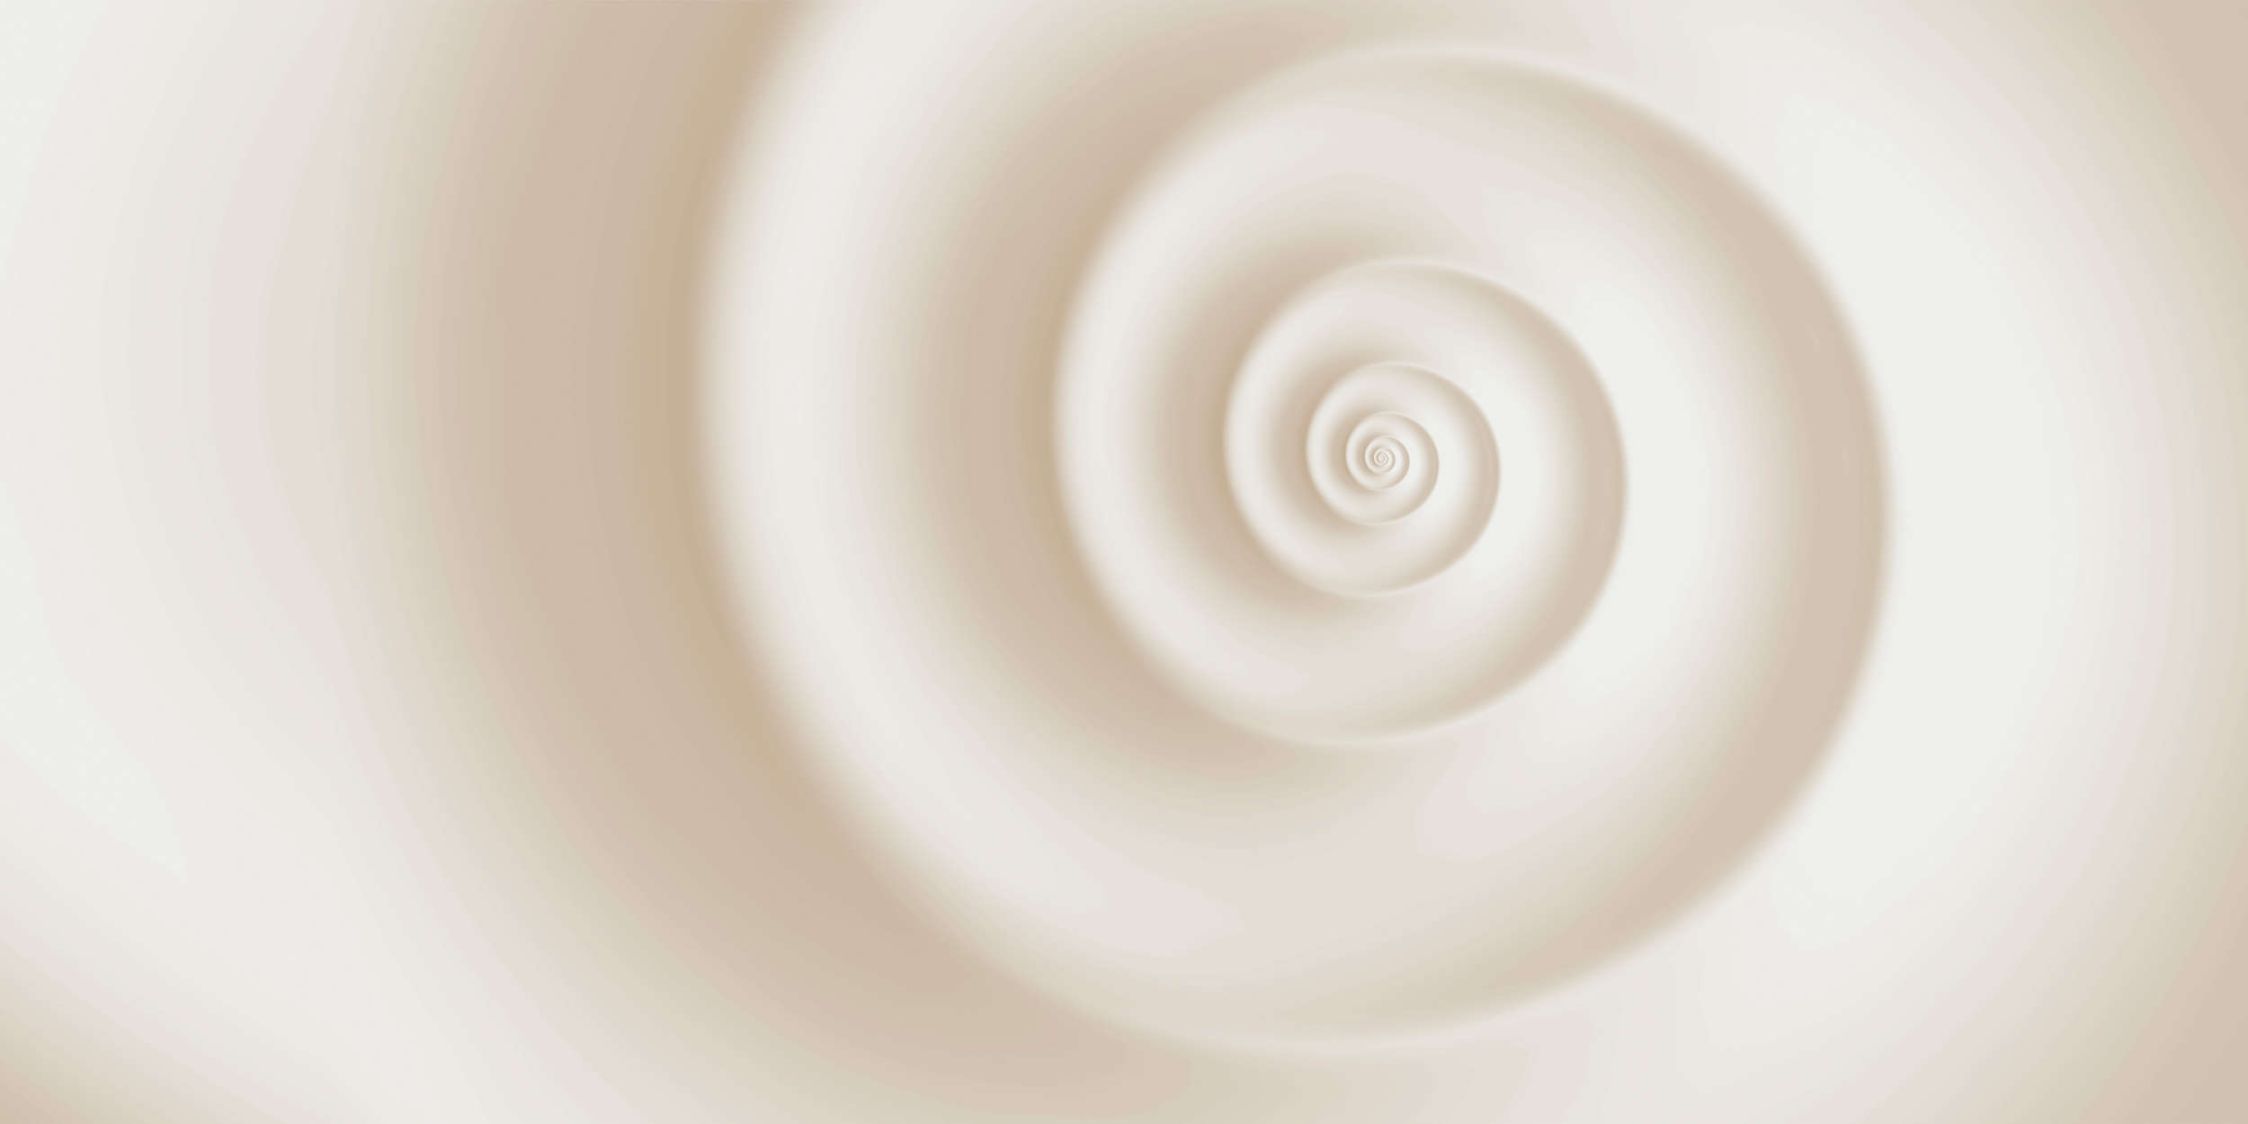             Fotomurali »swirl« - Leggero motivo a spirale - Materiali non tessuto opaco e liscio
        